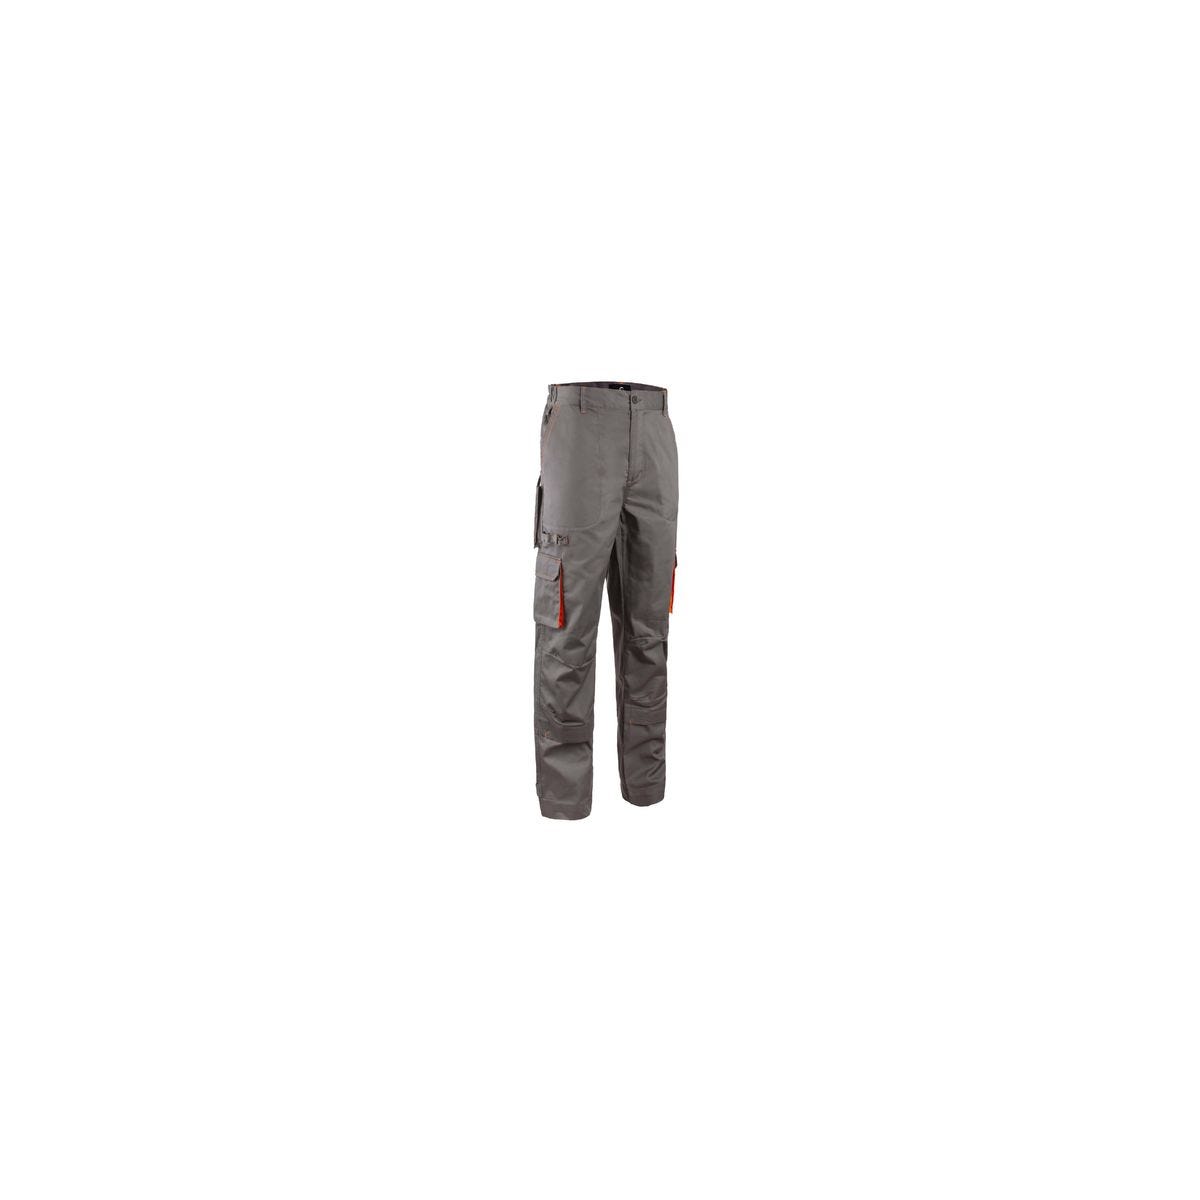 Pantalon PADDOCK II gris/orange - COVERGUARD - Taille 2XL 0